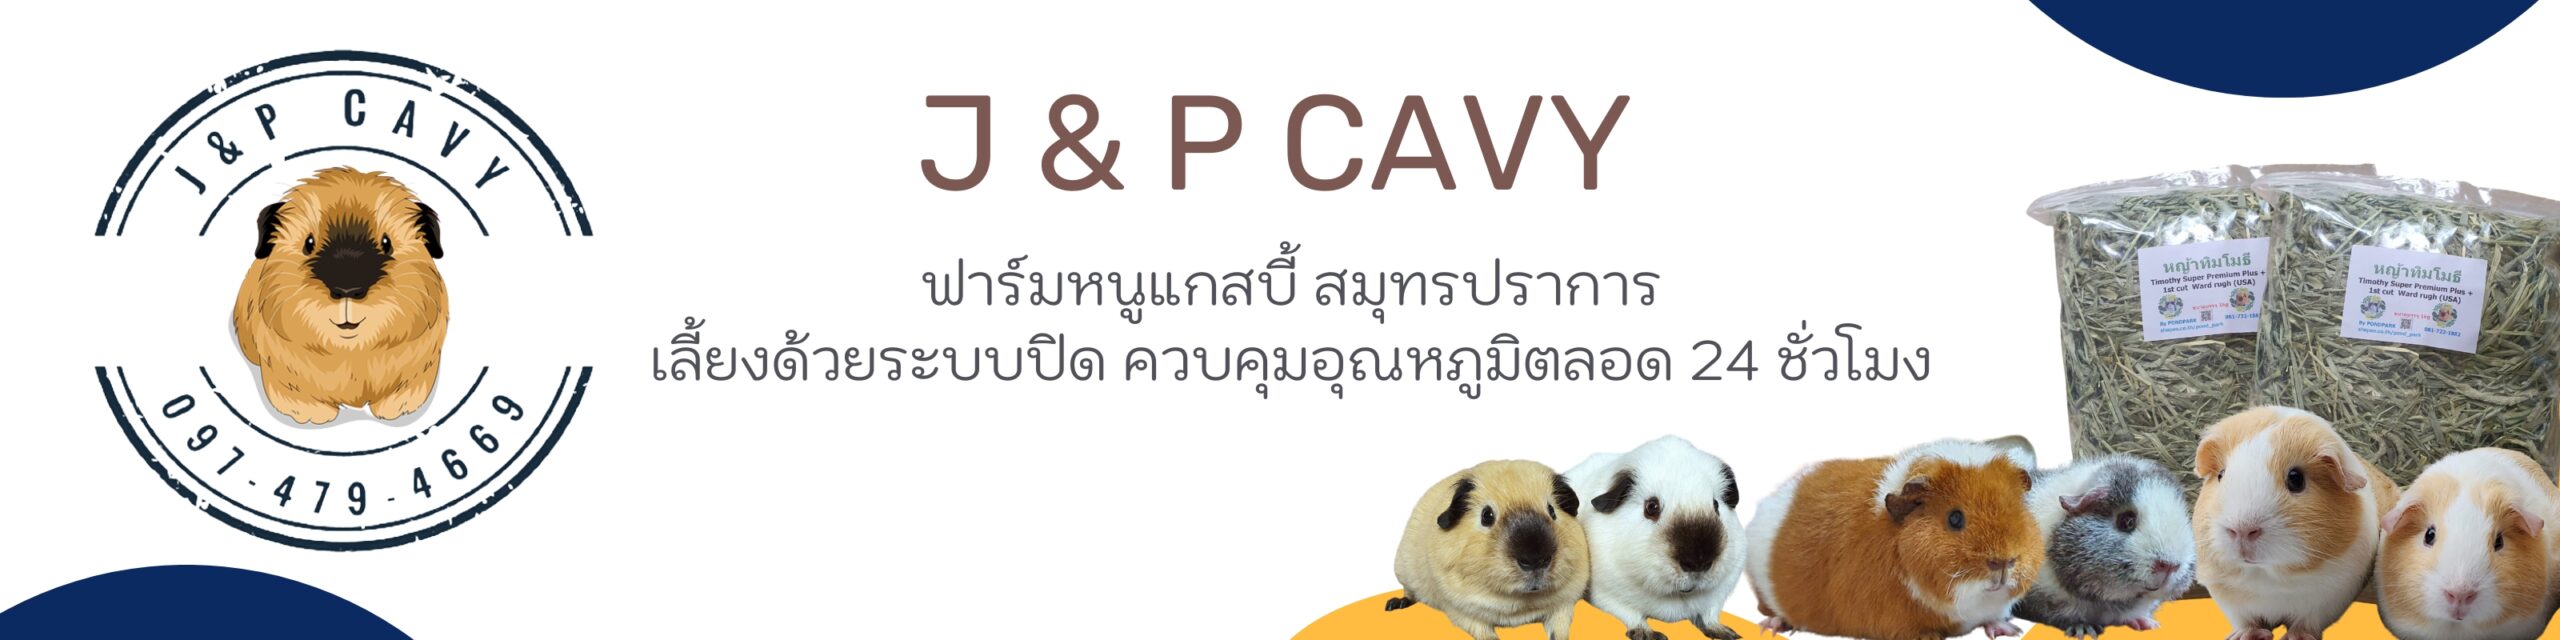 cover ร้าน J&P Cavy